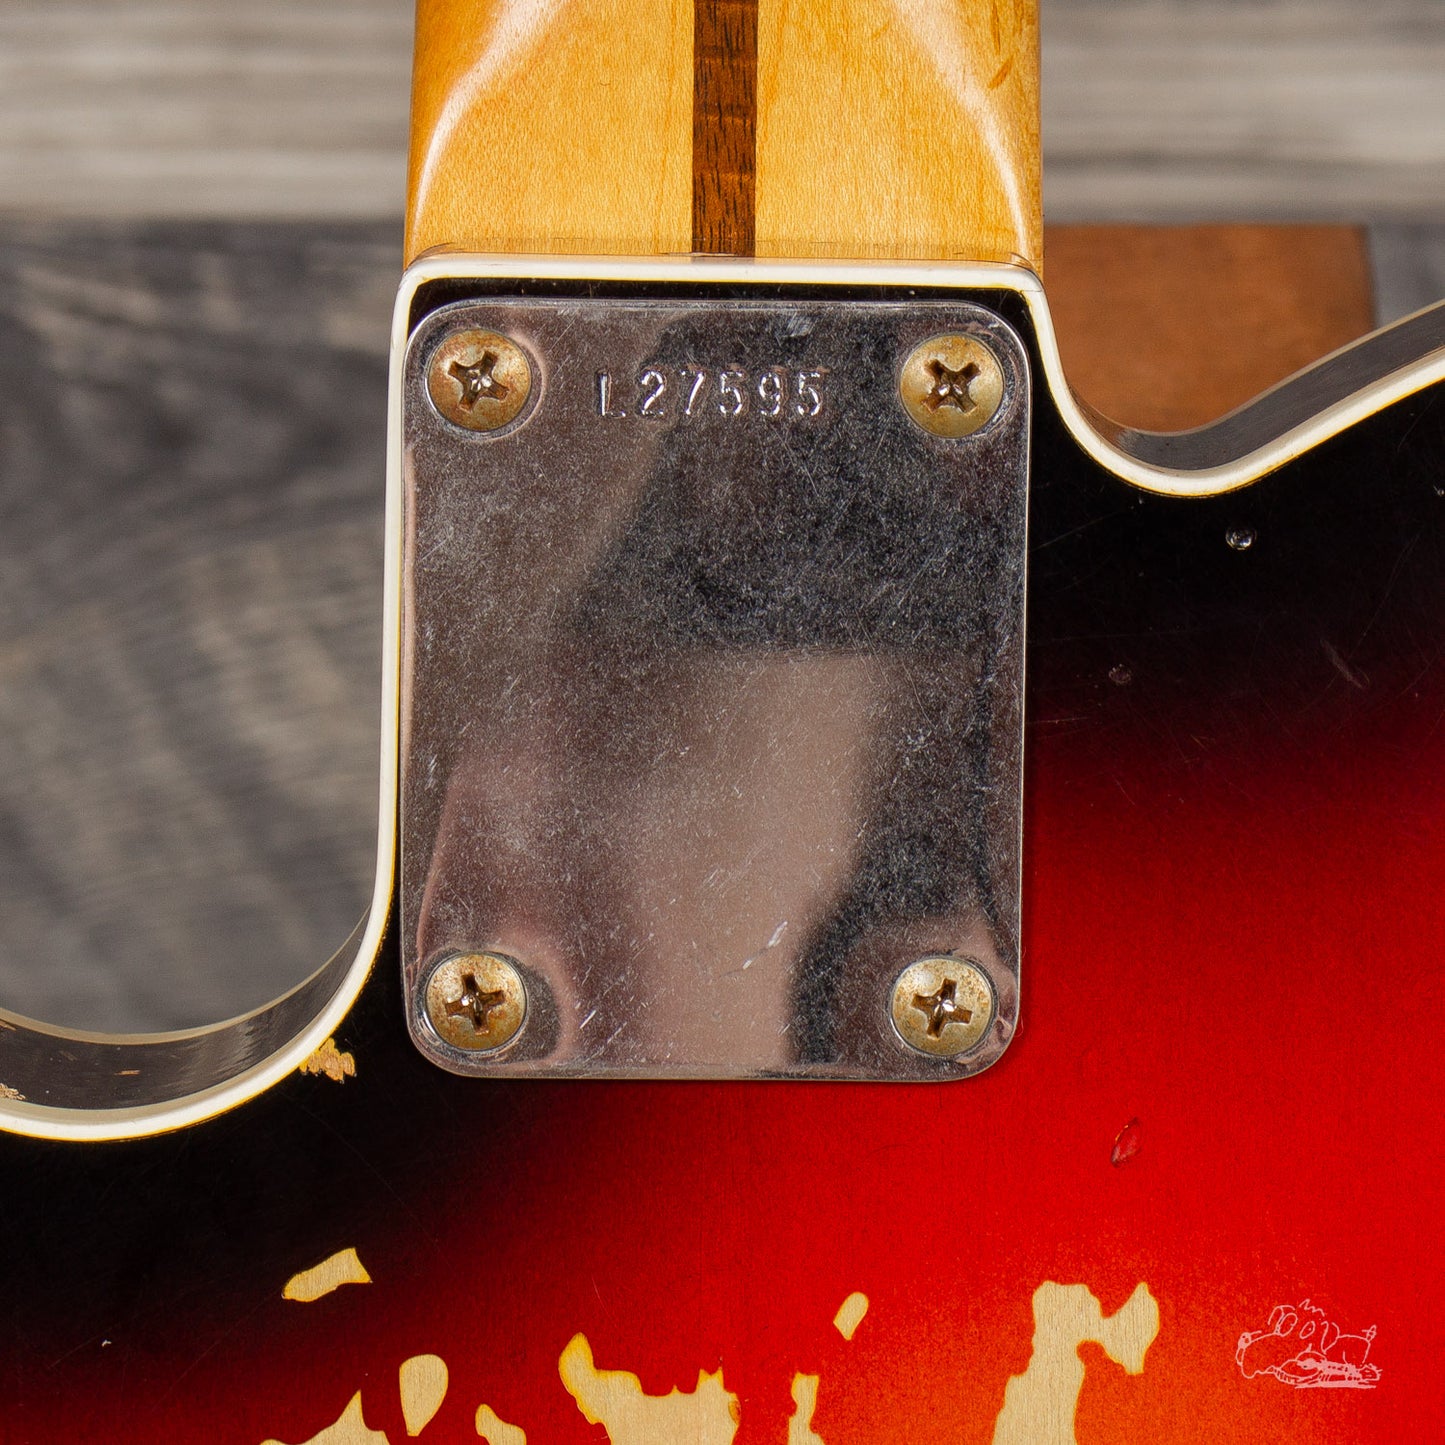 2007 Fender John Cruz Andy Summers Telecaster